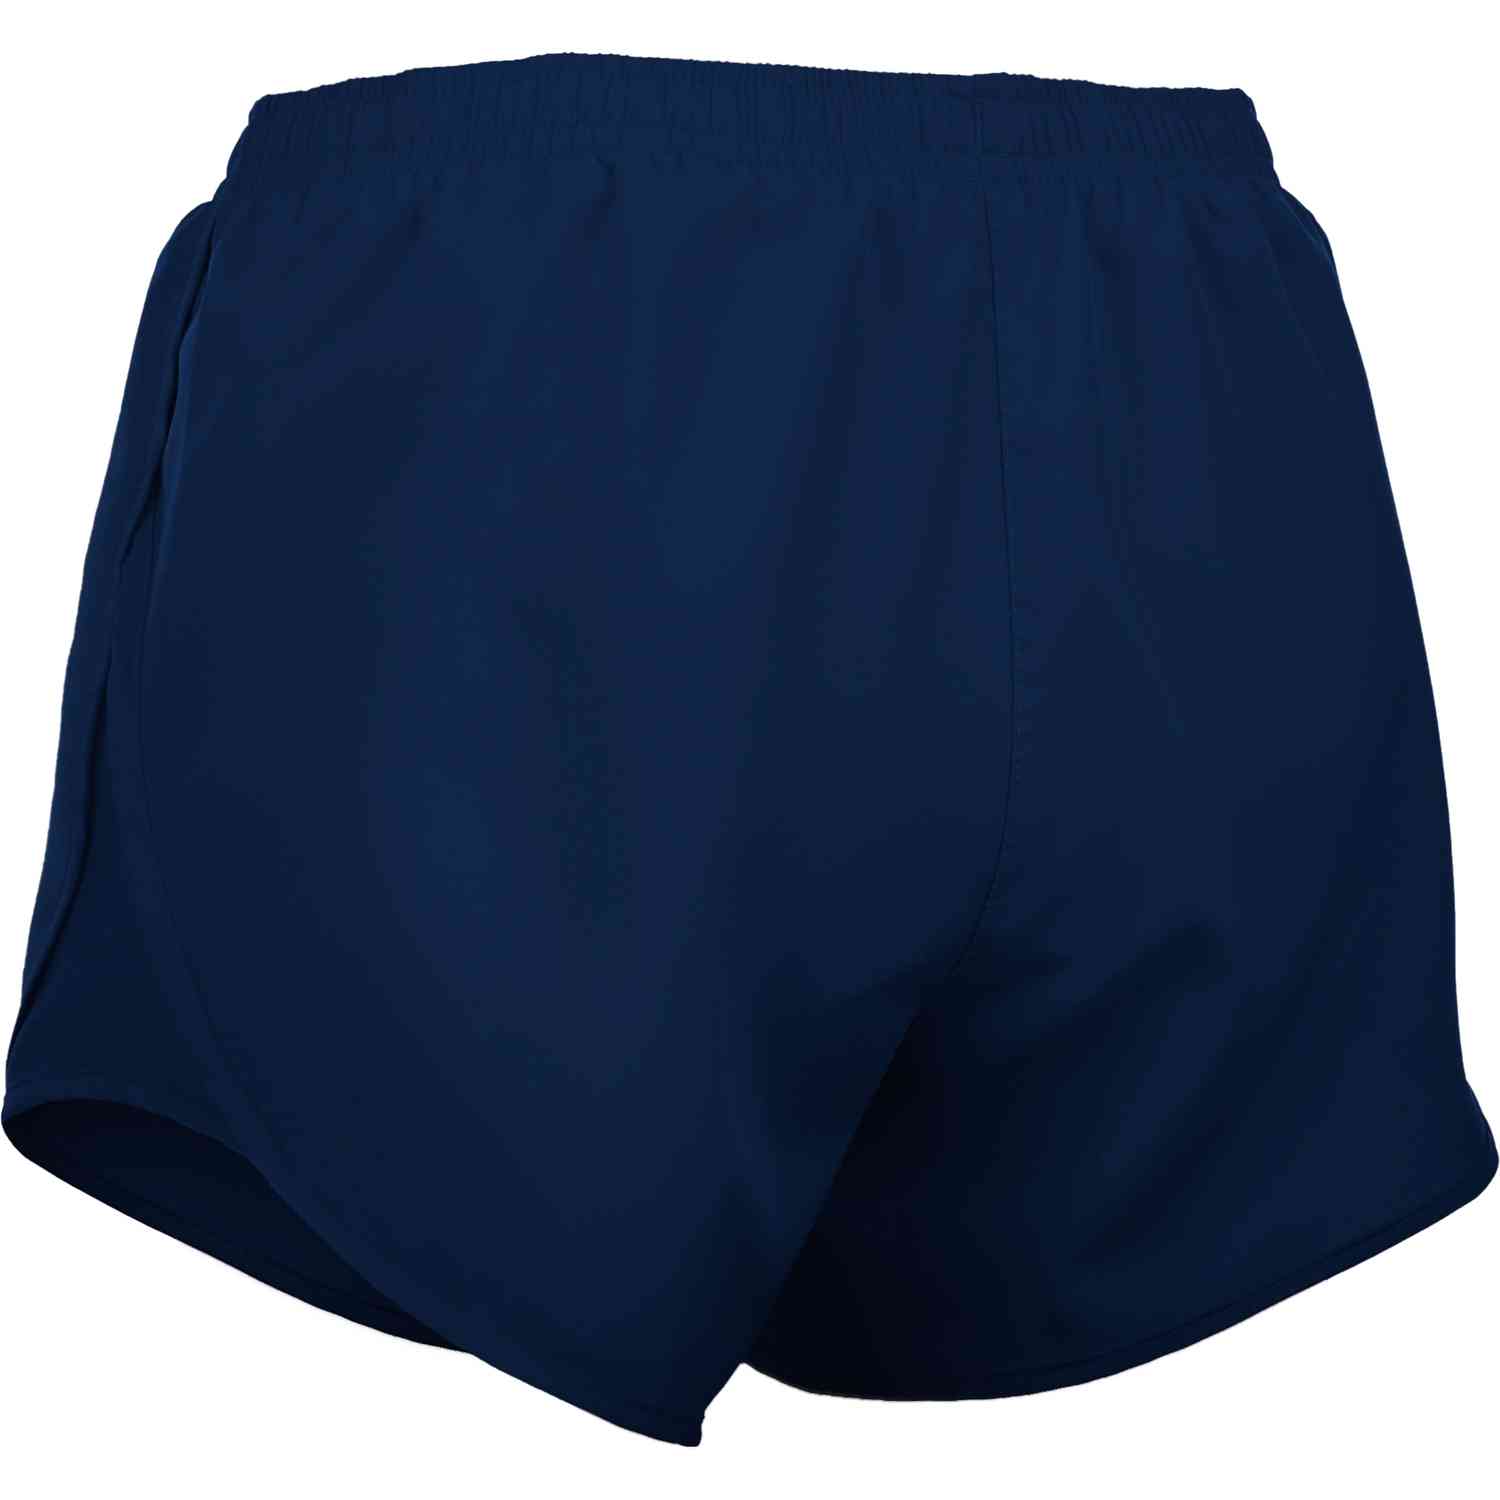 navy nike shorts womens